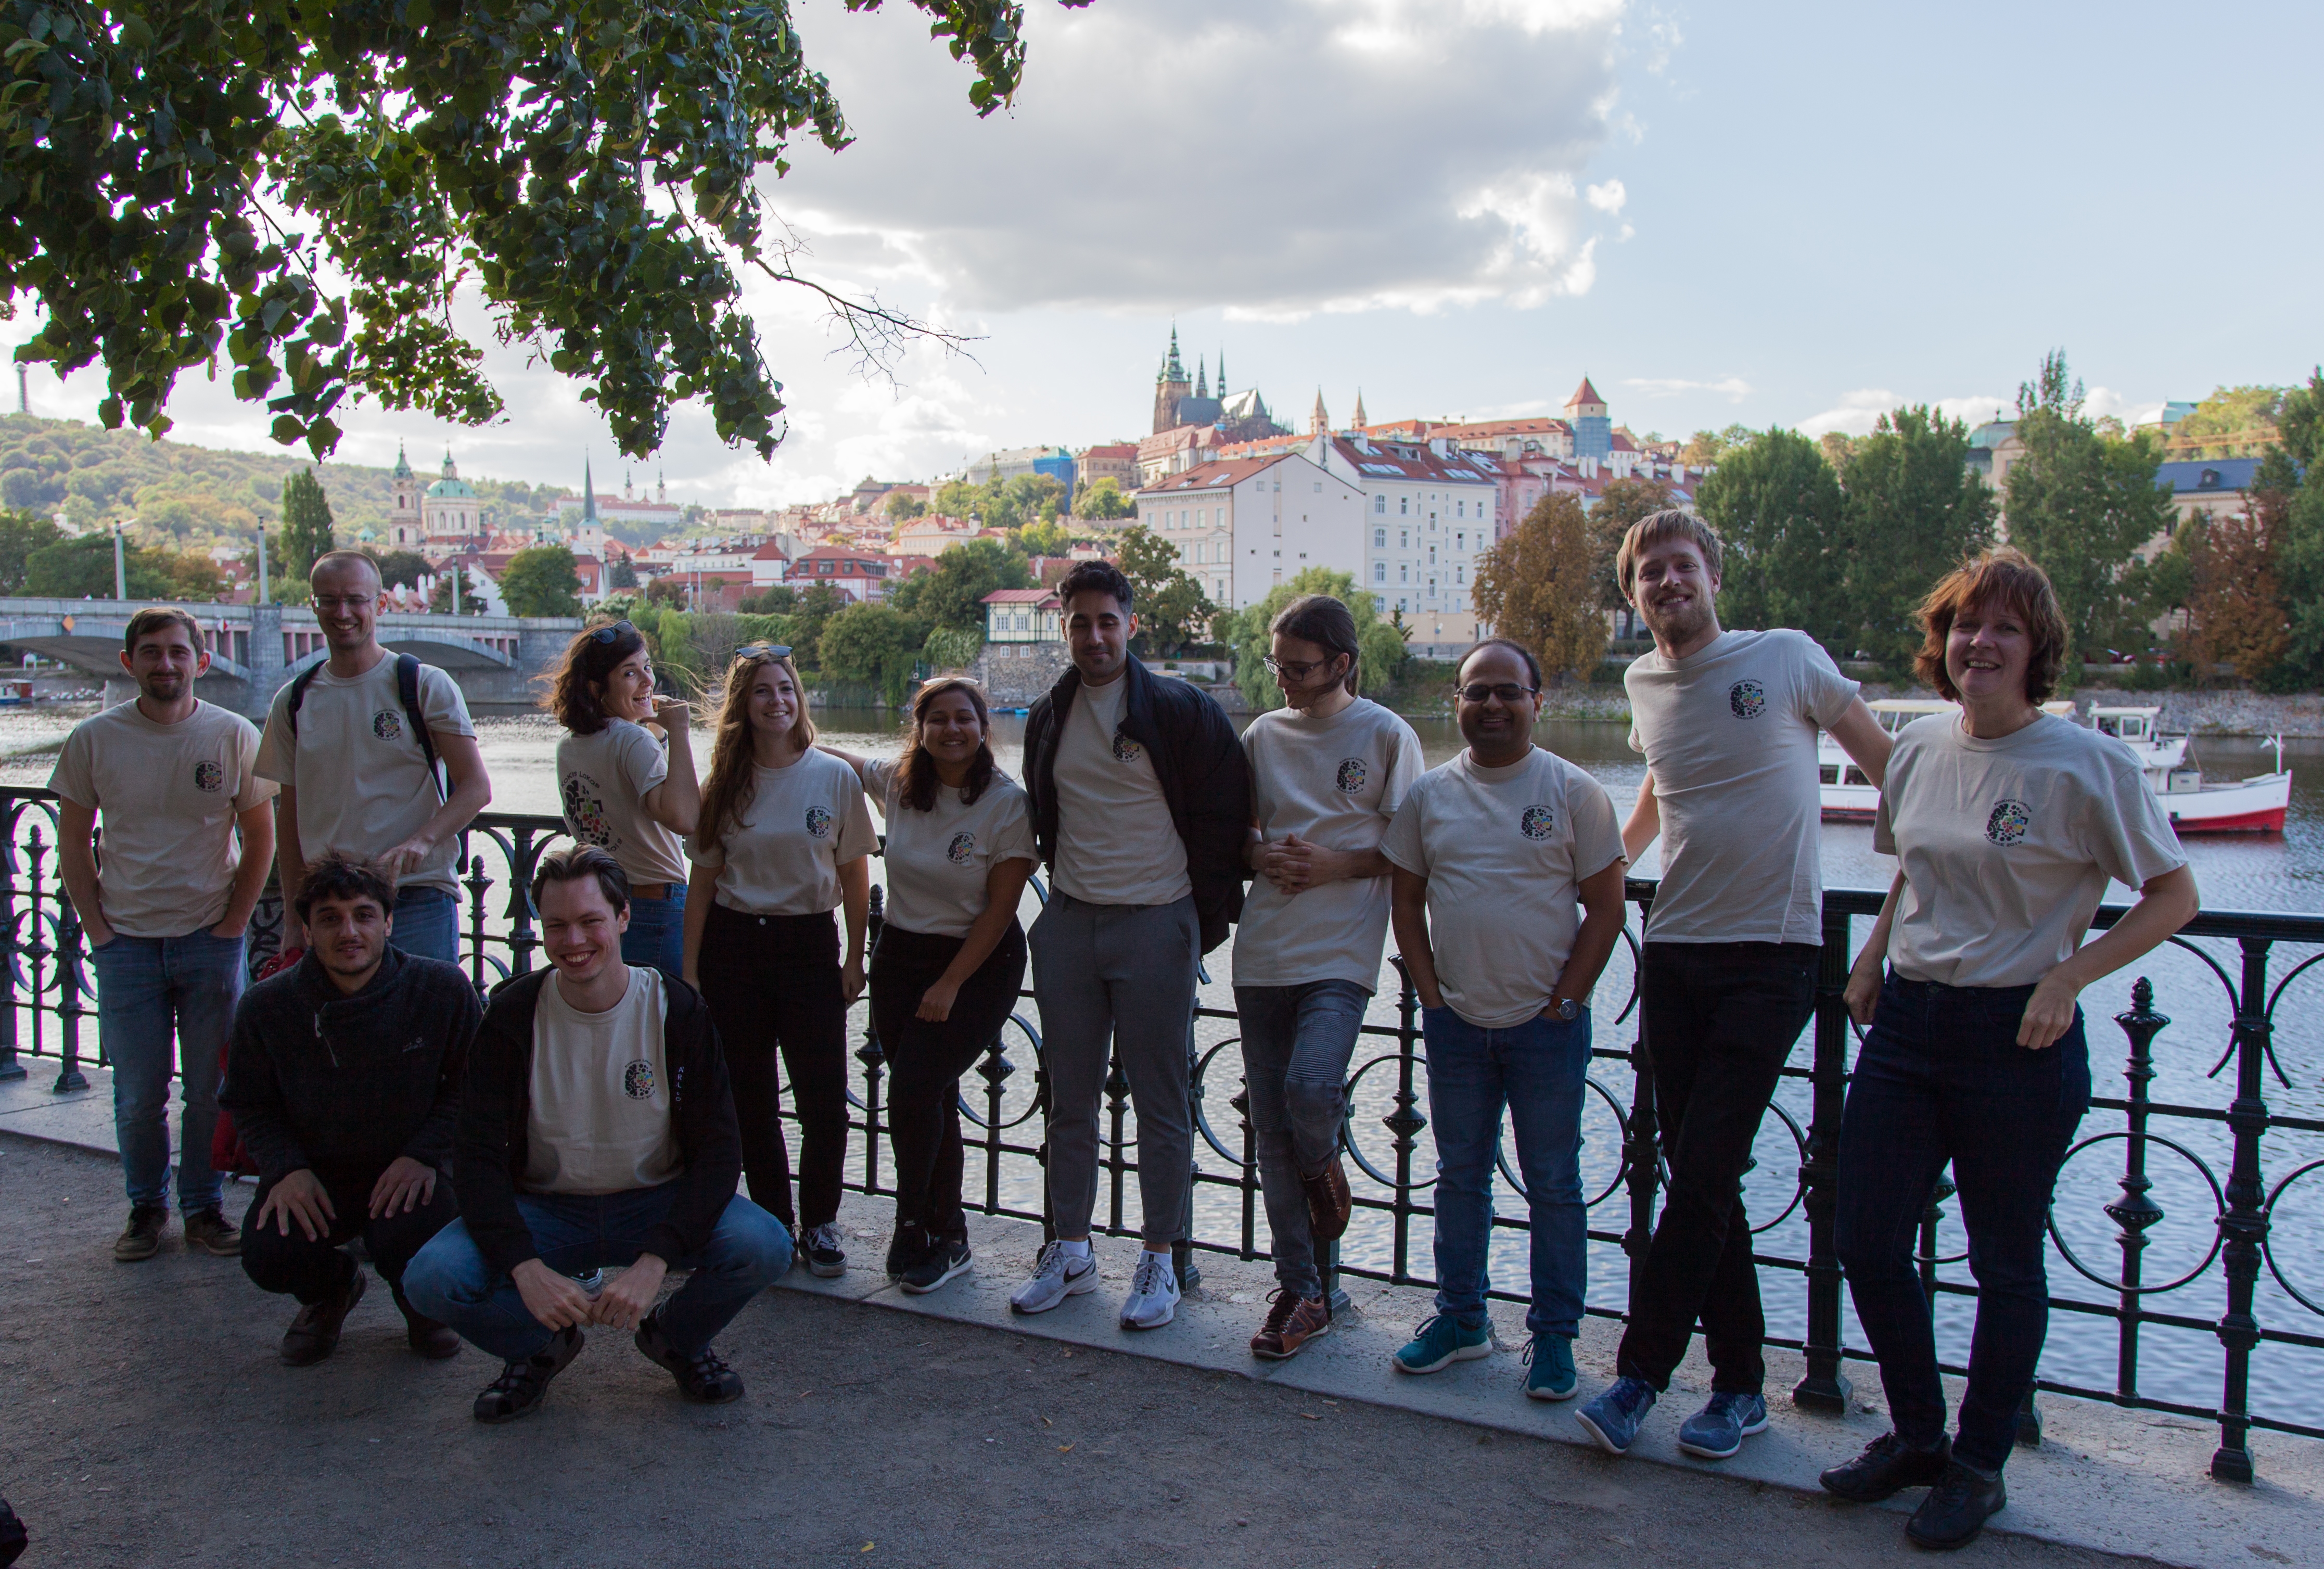 Image 1. Group photo on the Vltava river embankment. From left to right: Misha, Kostya, Berta, Andrea, Sushmita, Edmond, Norbert, Navneet, Rasmus, Irina. Sitting: Diego and Viktor.